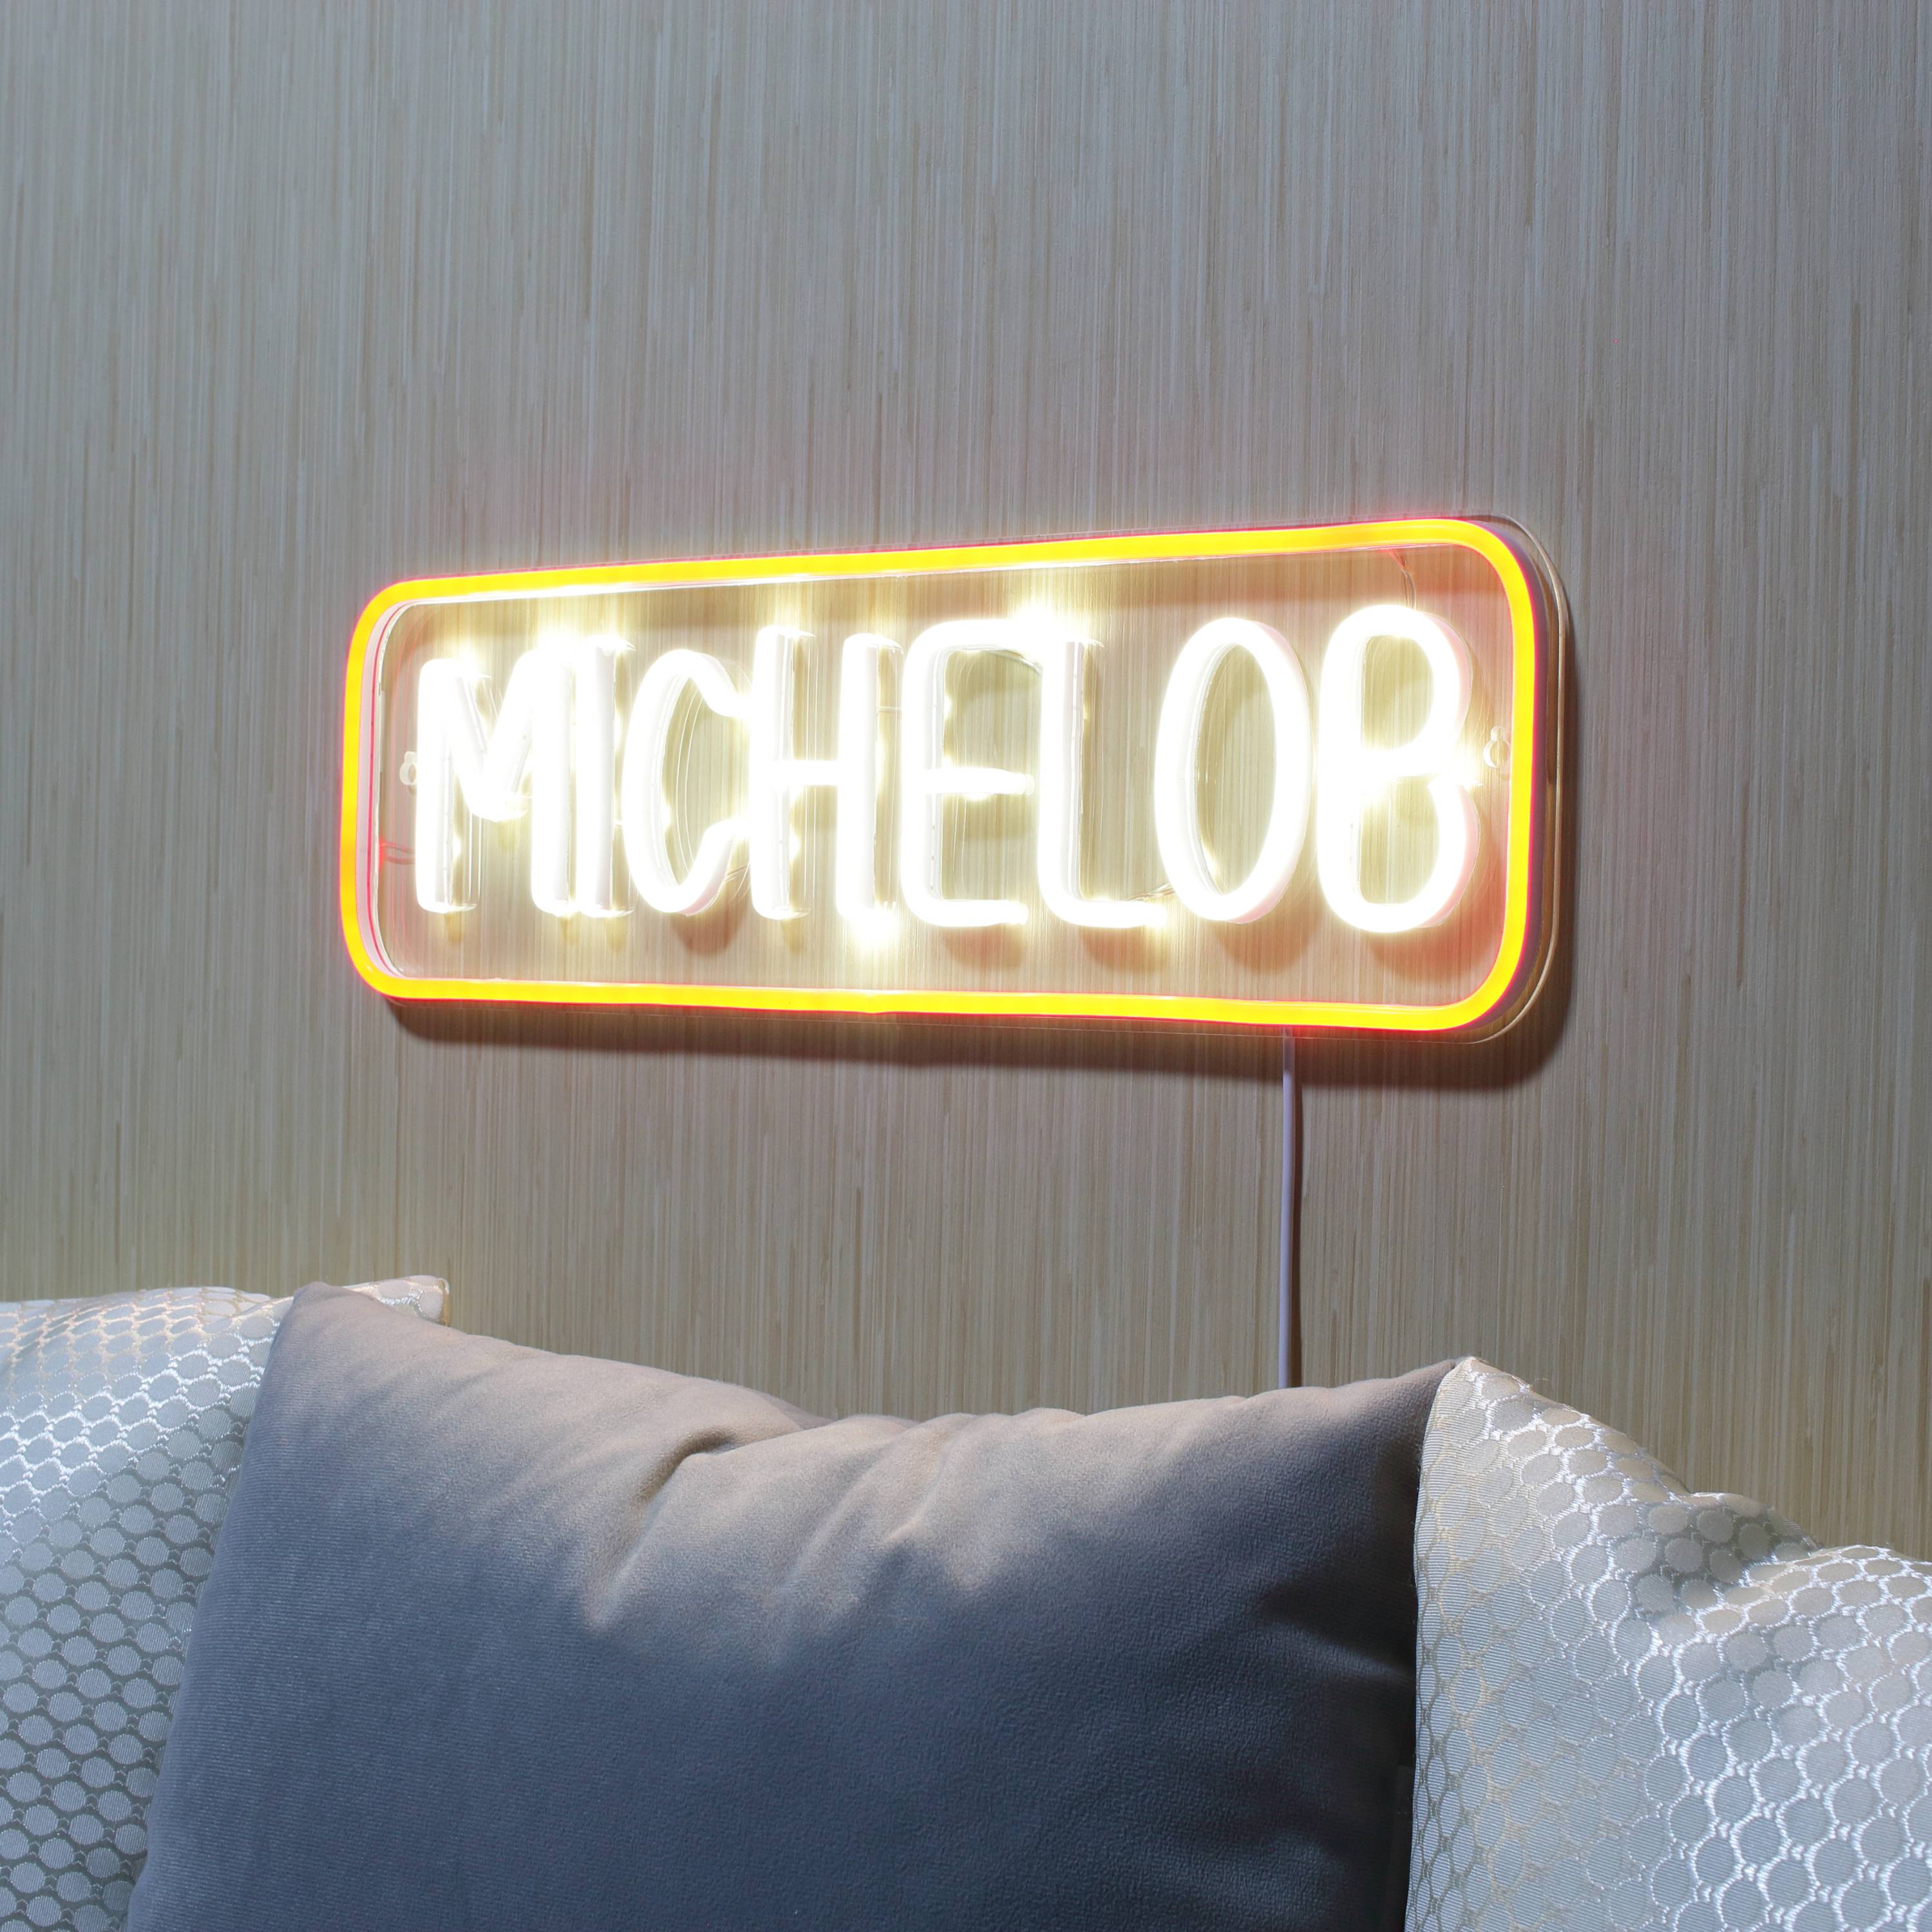 Michelob Large Flex Neon LED Sign